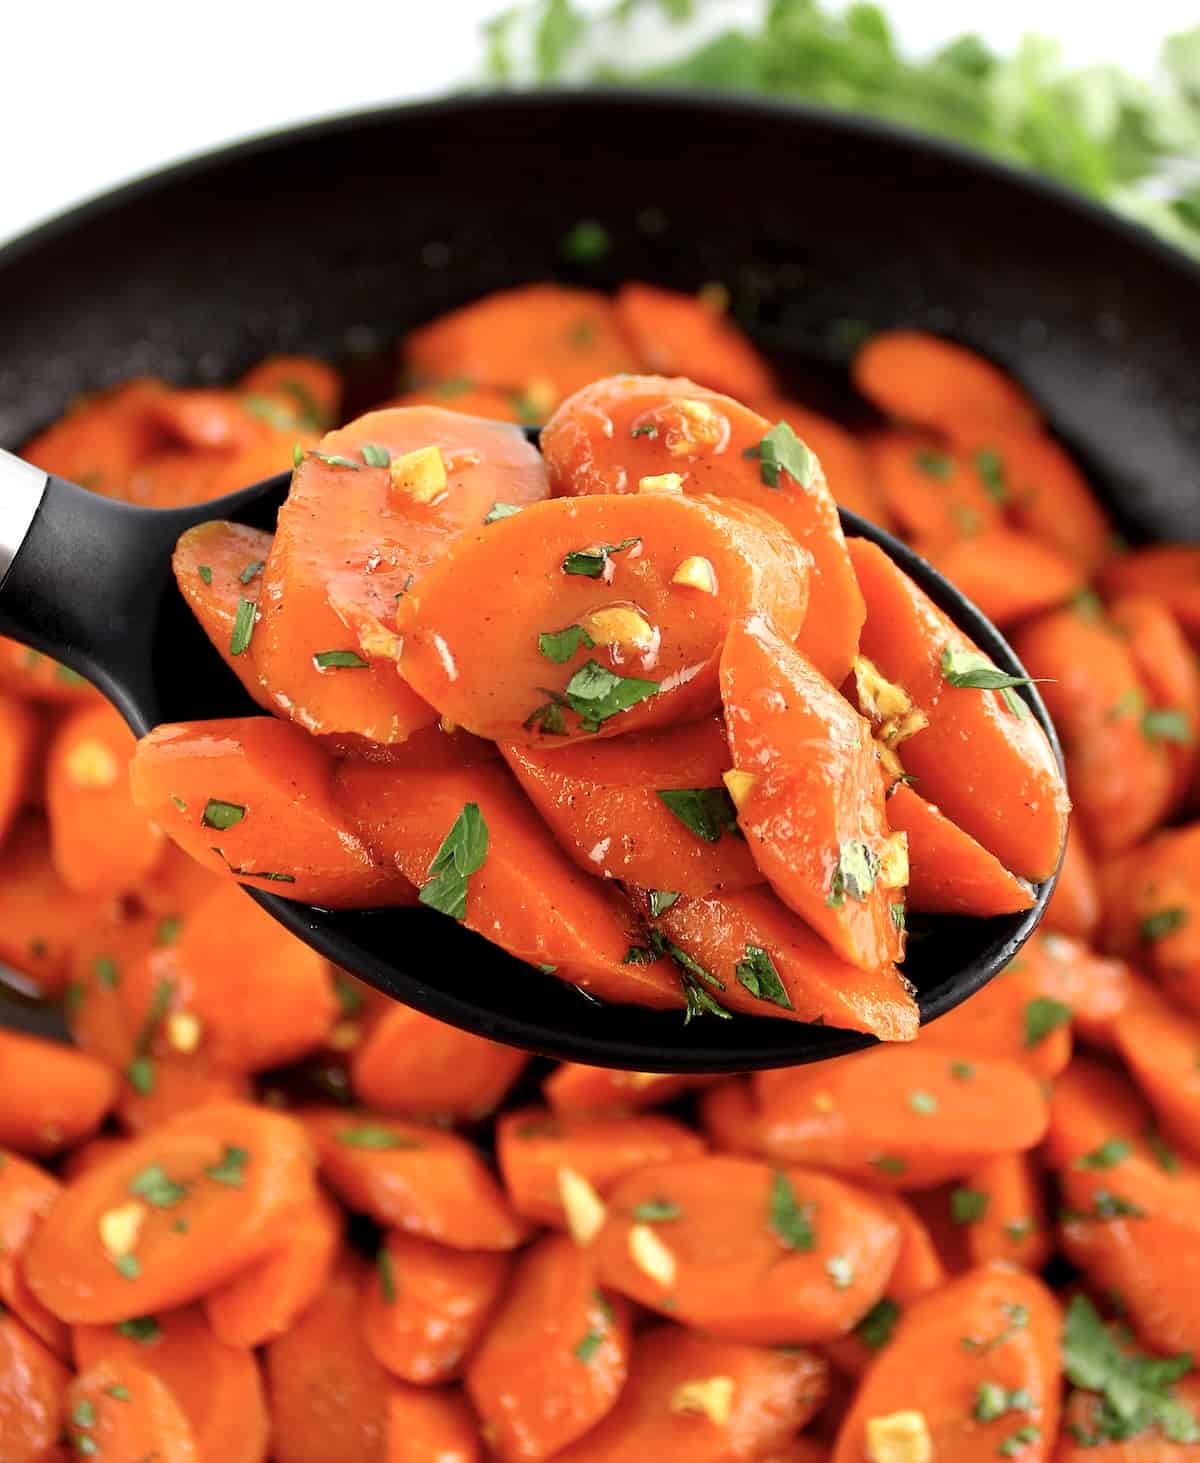 Glazed Carrots held up with black serving spoon over skillet